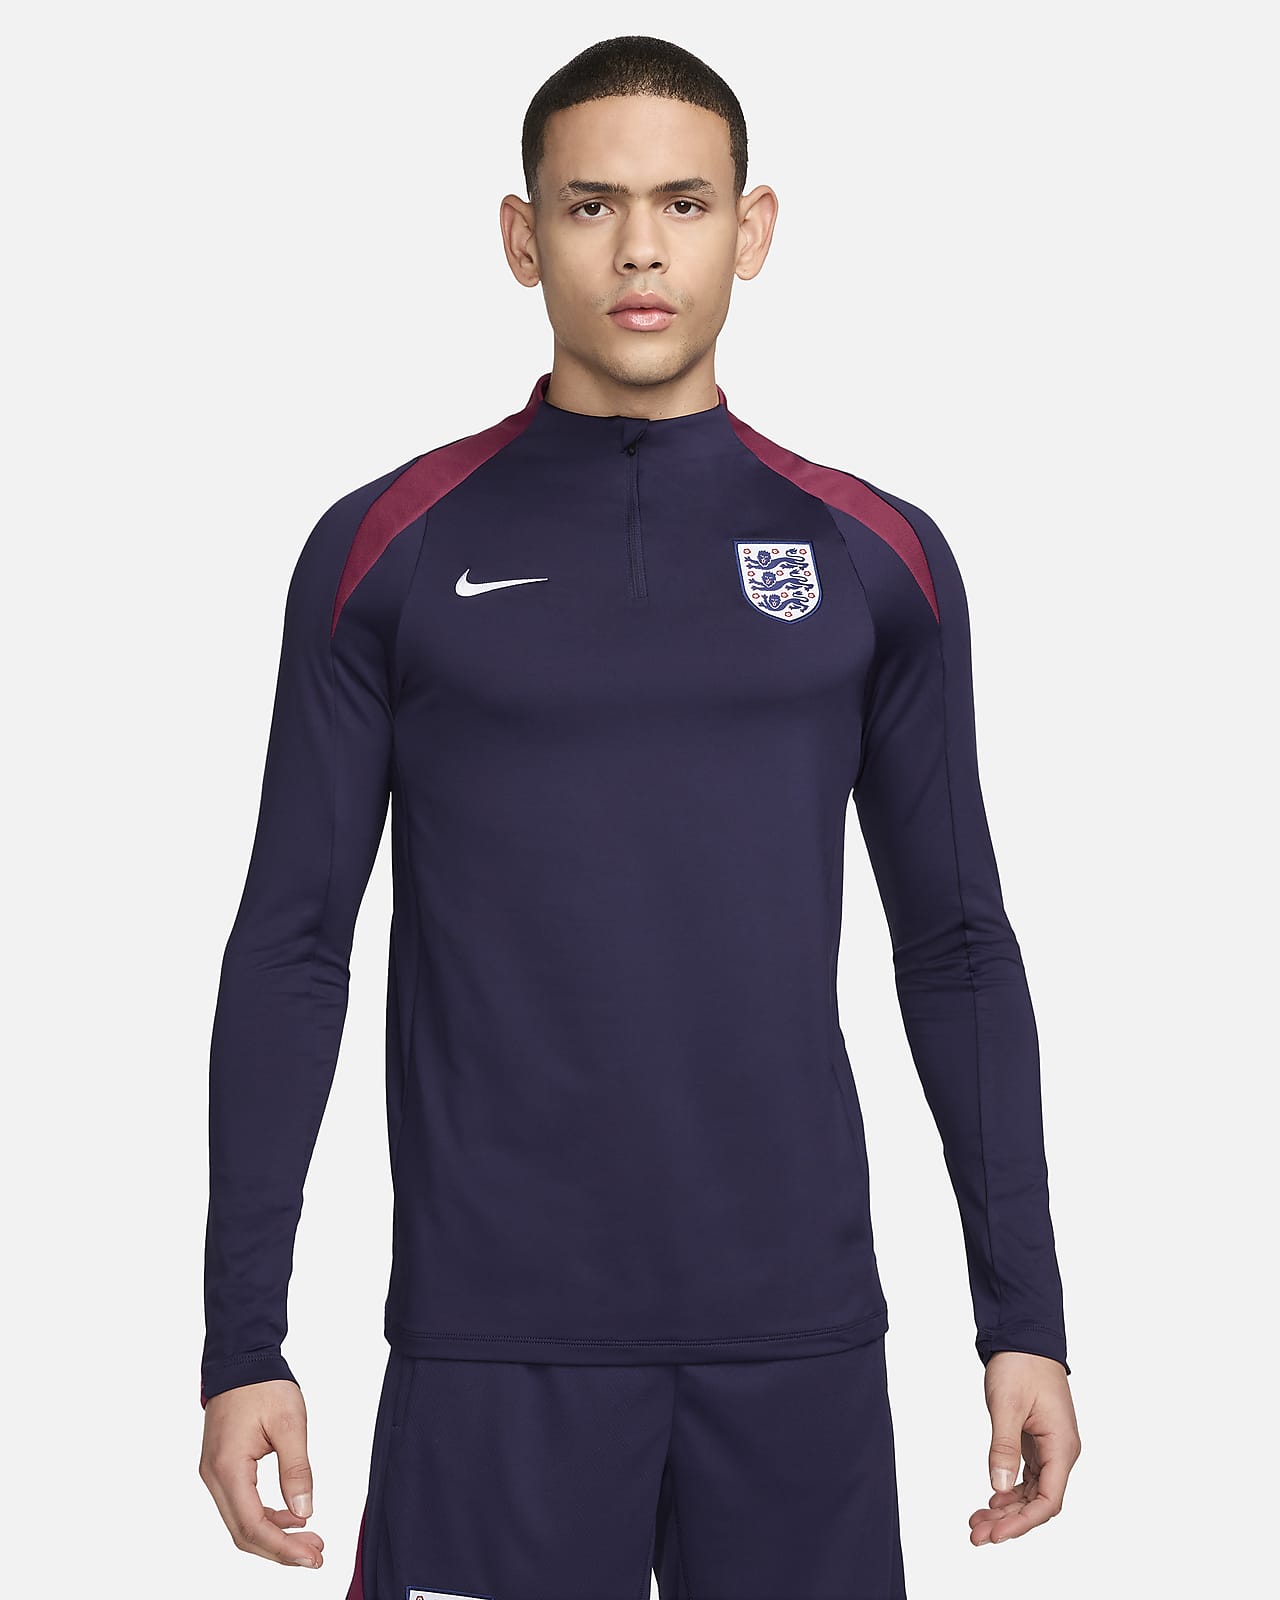 Anglia Strike Nike Dri-FIT férfi futballedzőfelső